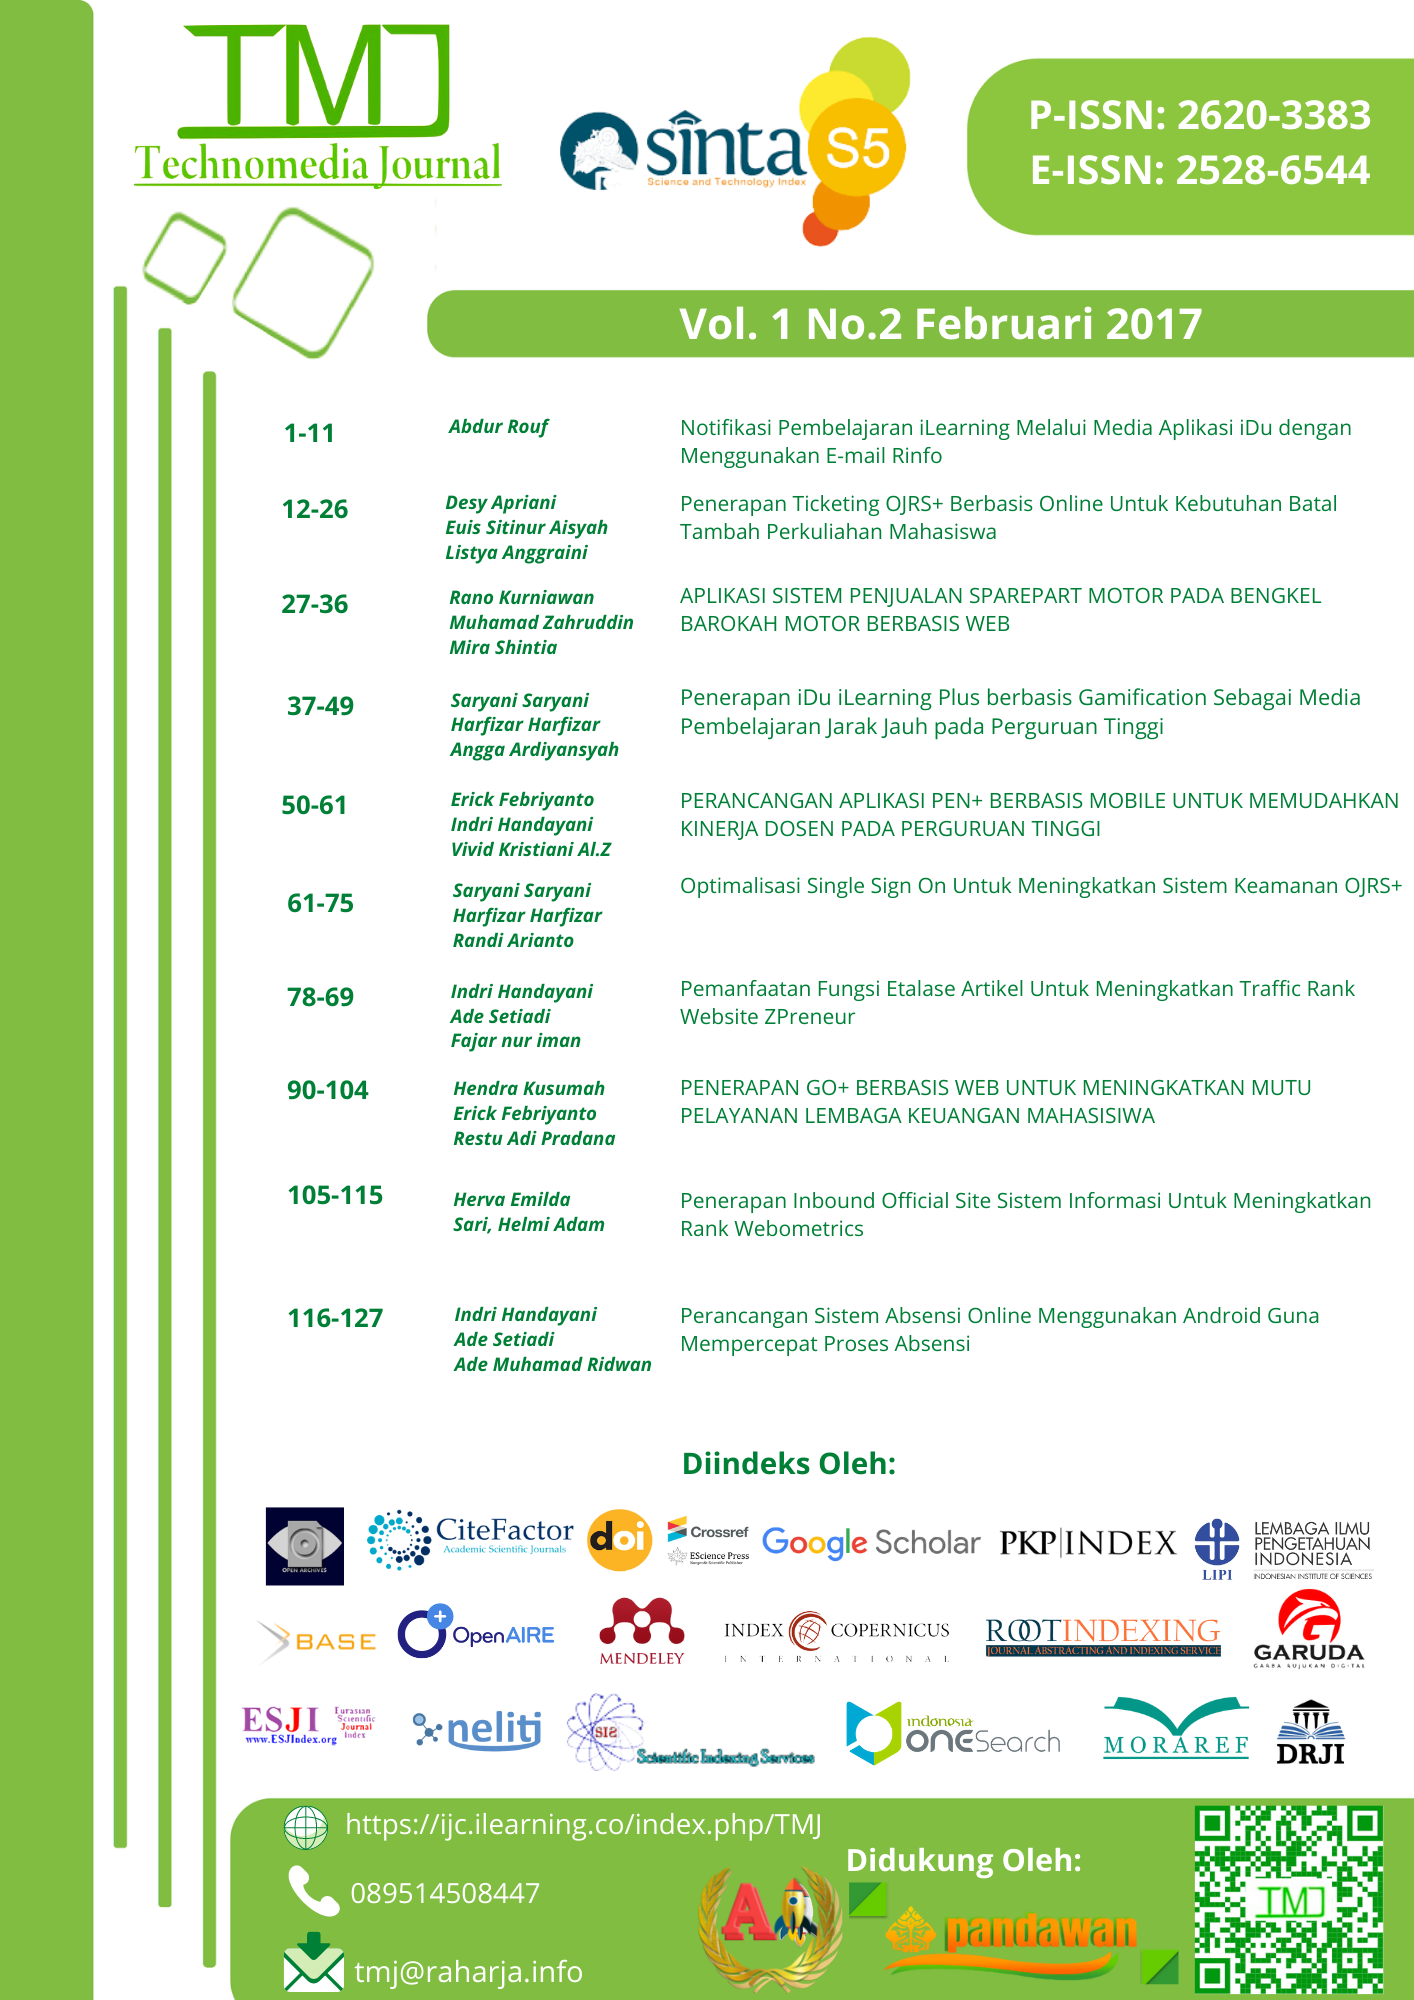 					Lihat Vol 1 No 2 Februari (2017): Technomedia Journal
				